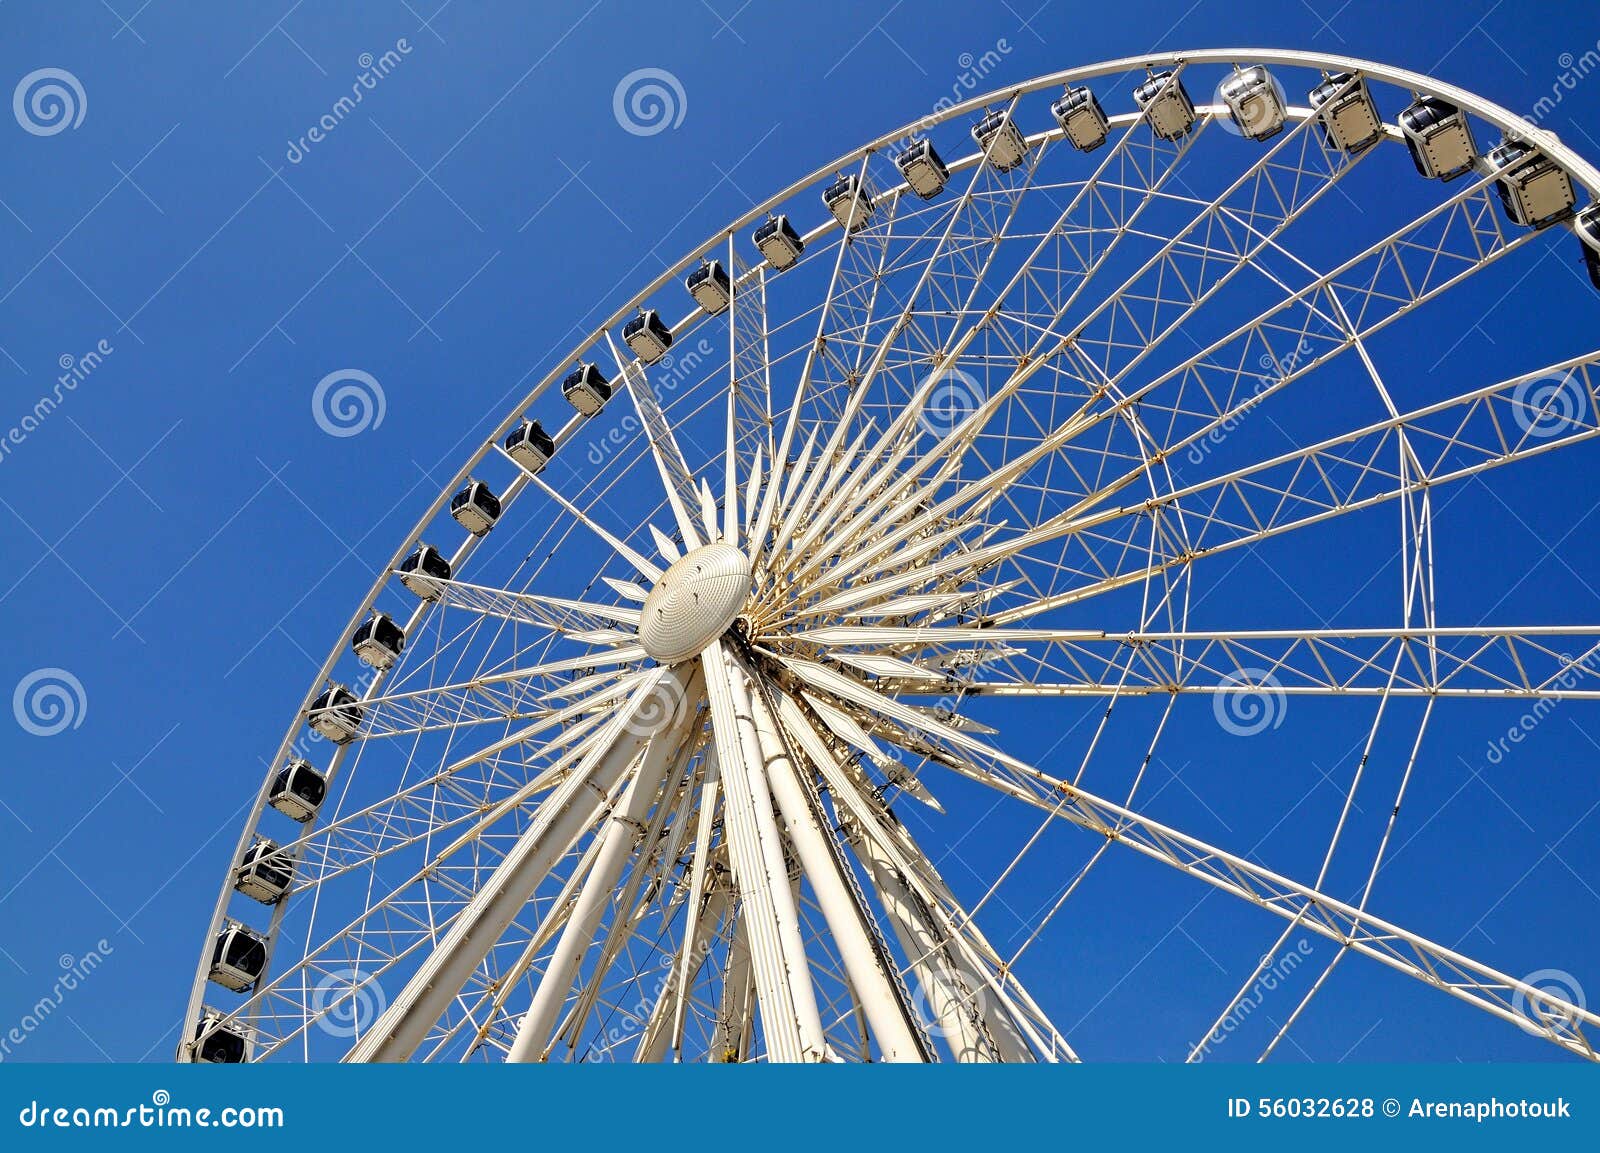 View of the Echo wheel of Liverpool at Keel Wharf, Liverpool, Merseyside, England, UK, Western Europe.